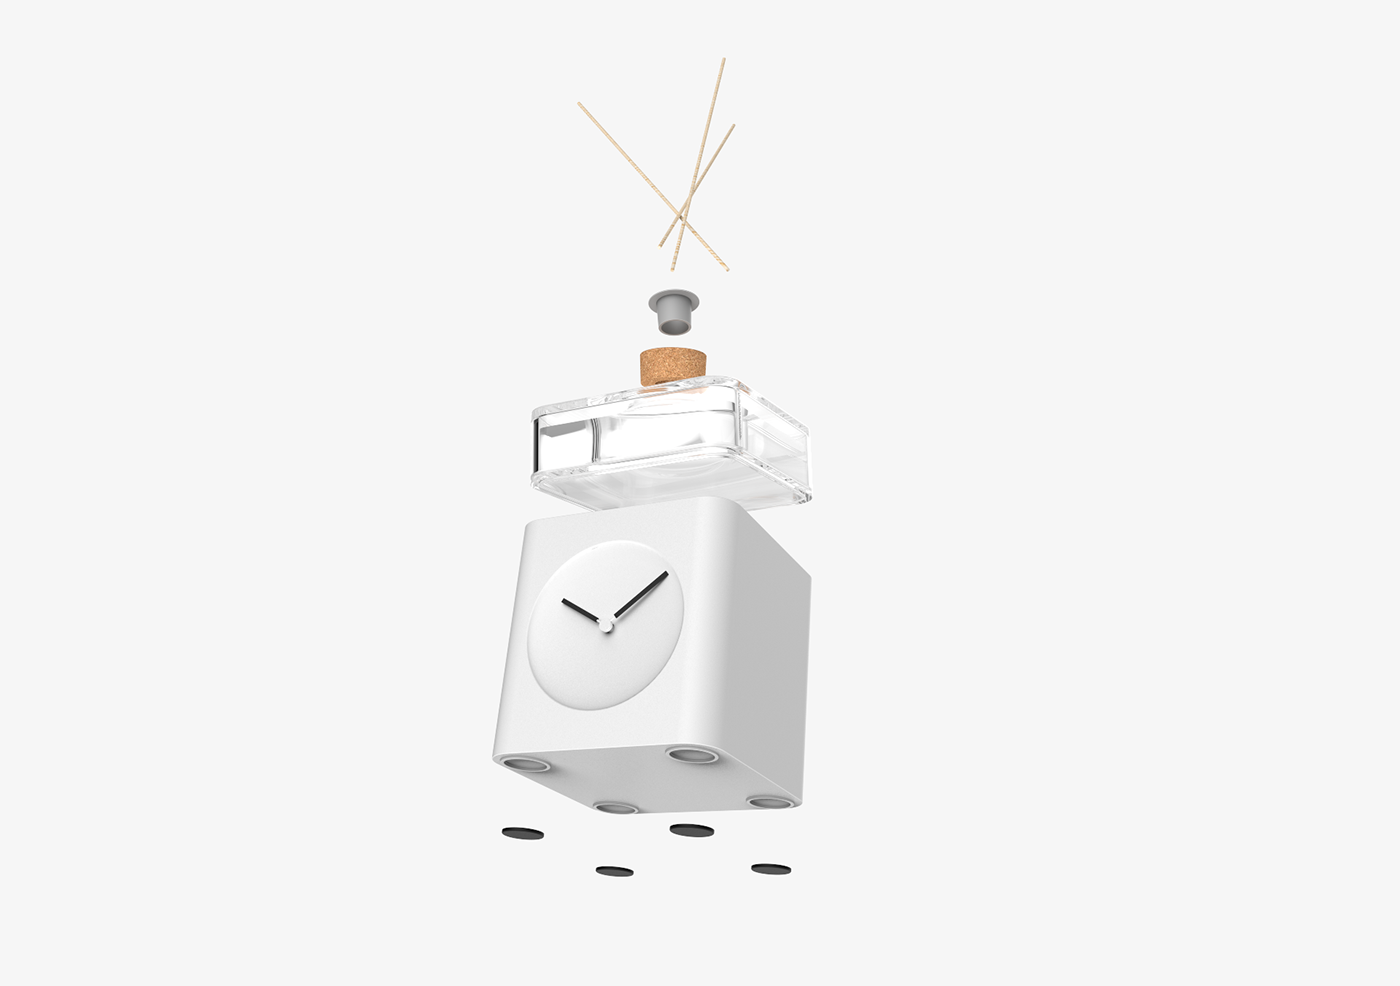 product clock diffuser desk time industrial simple productdesign industrialdesign Minimalism